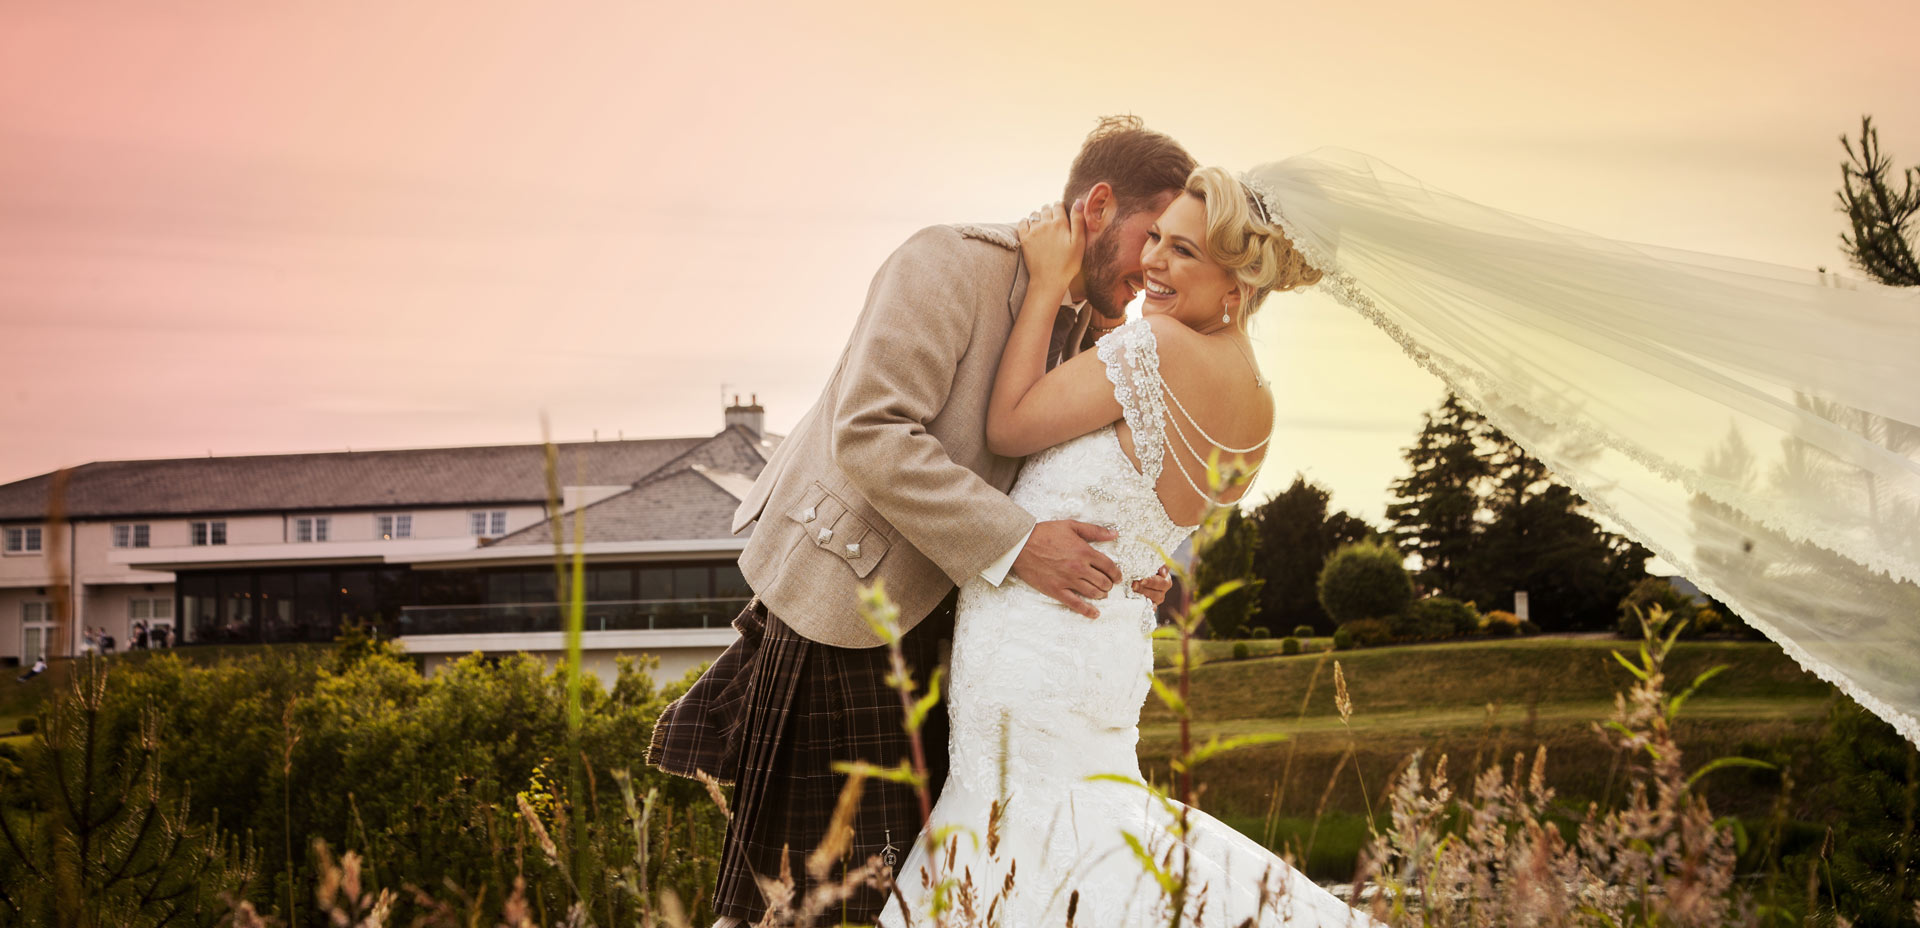 Wedding photography for Scotland